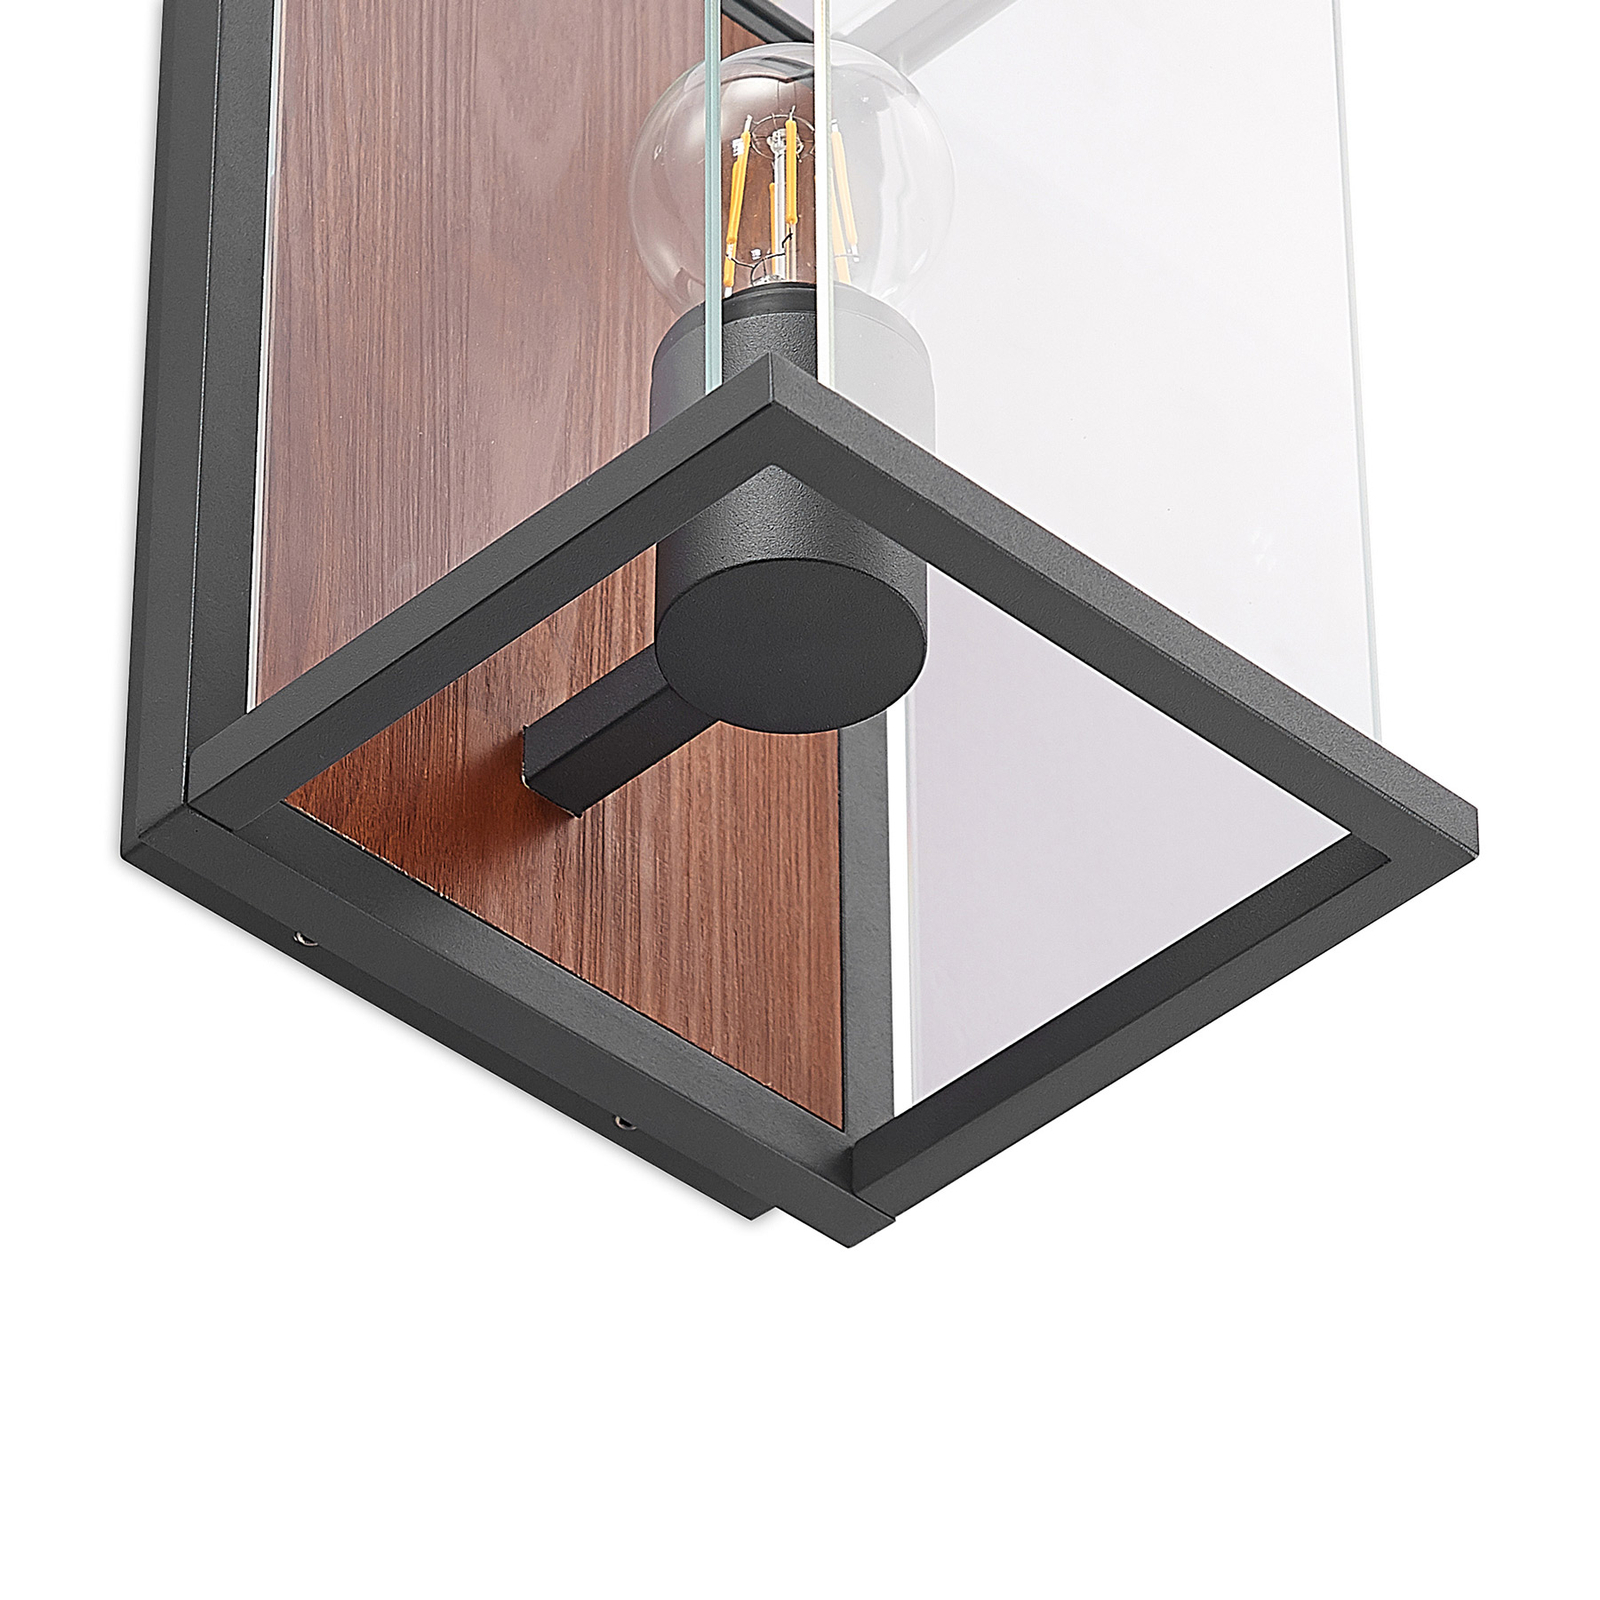 Lucande Elwin wall light, angular, one-bulb